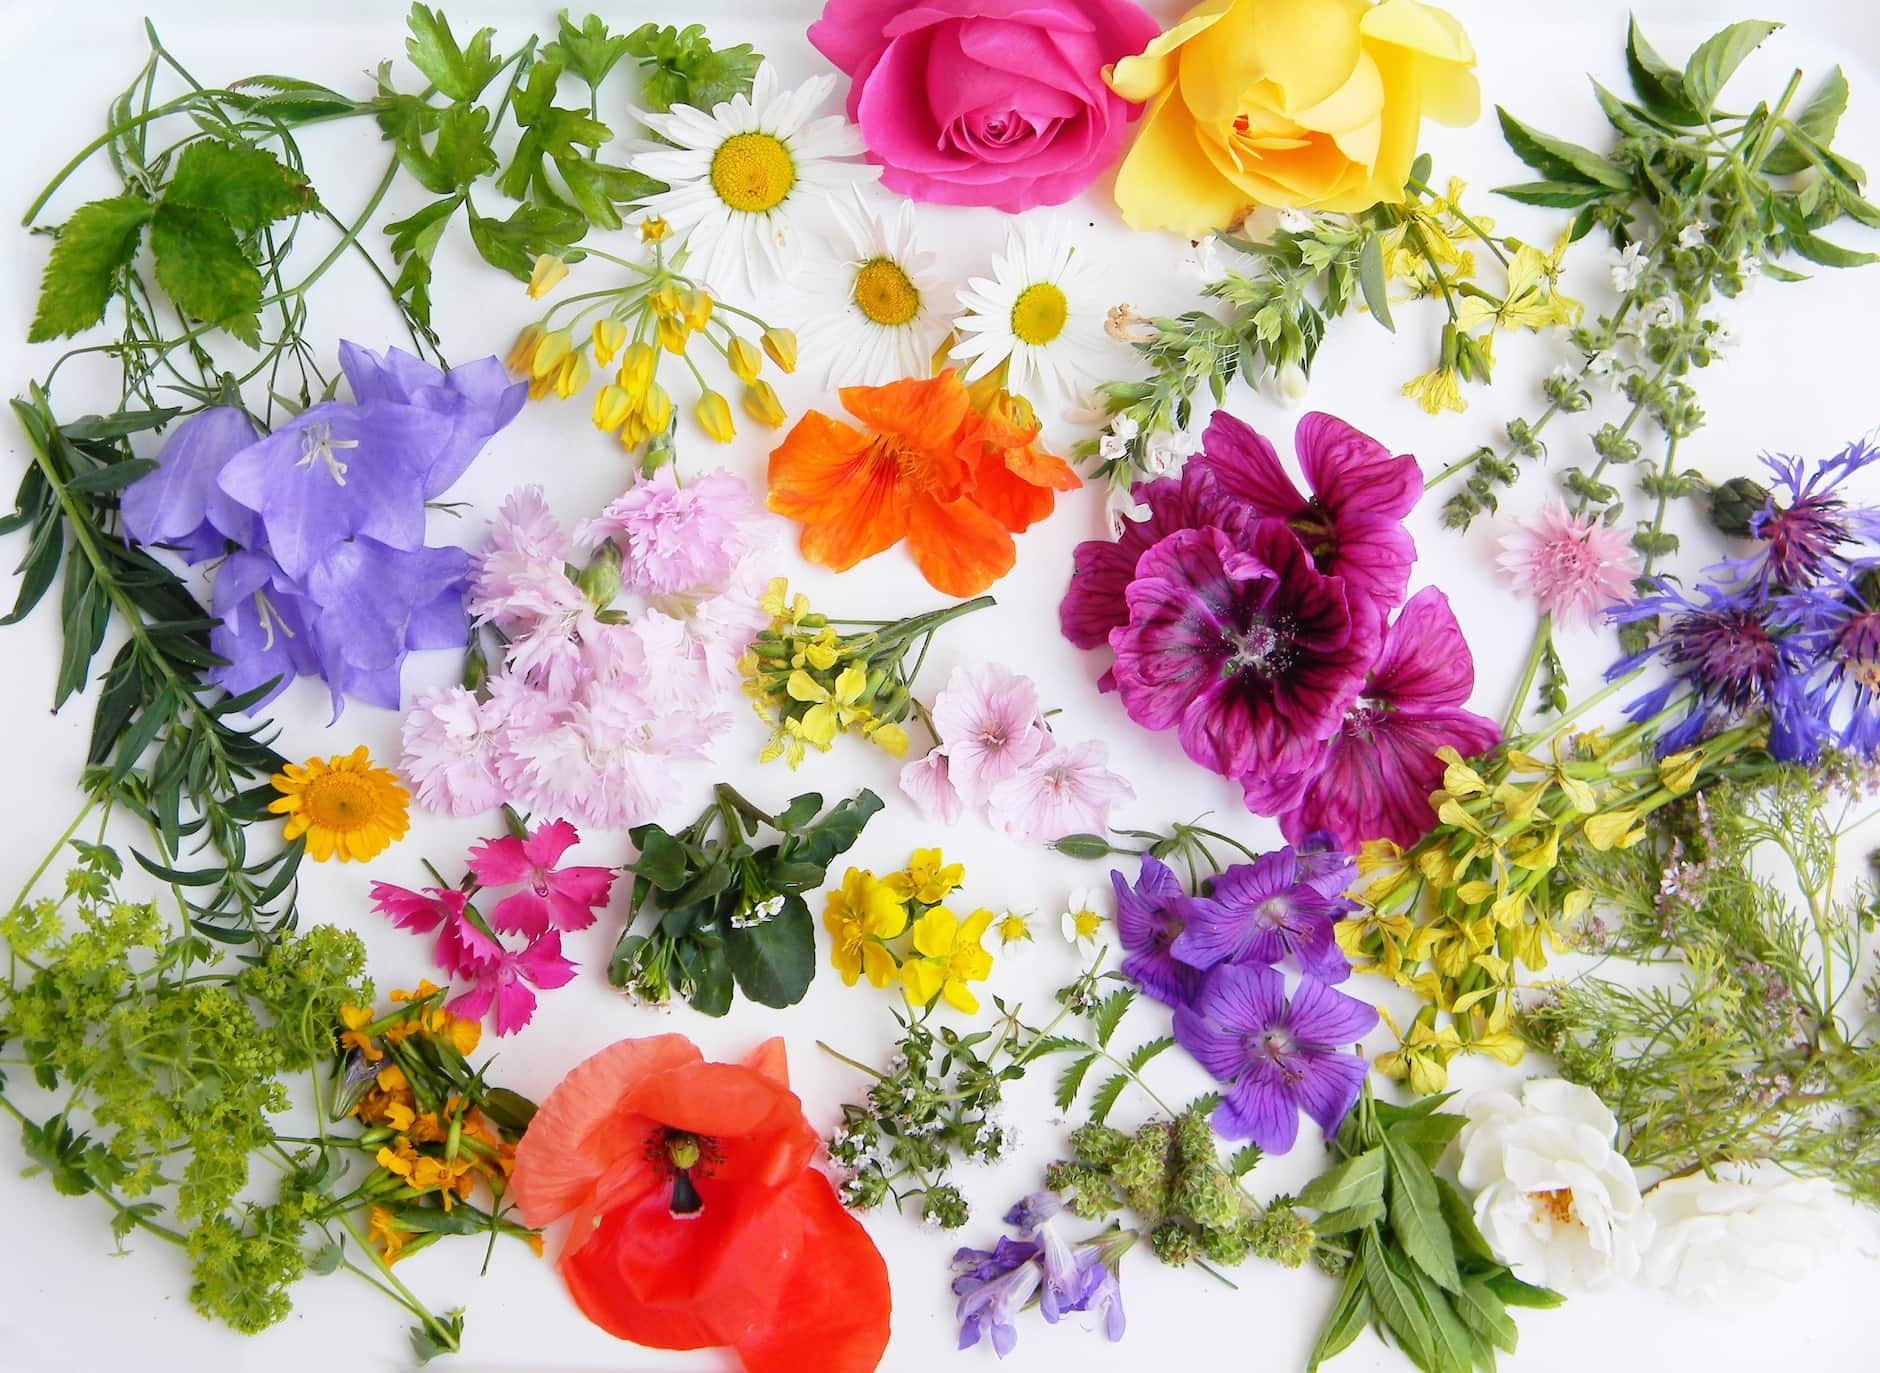 10 Edible Flowers To Grow This Spring - Farmers' Almanac - Plan